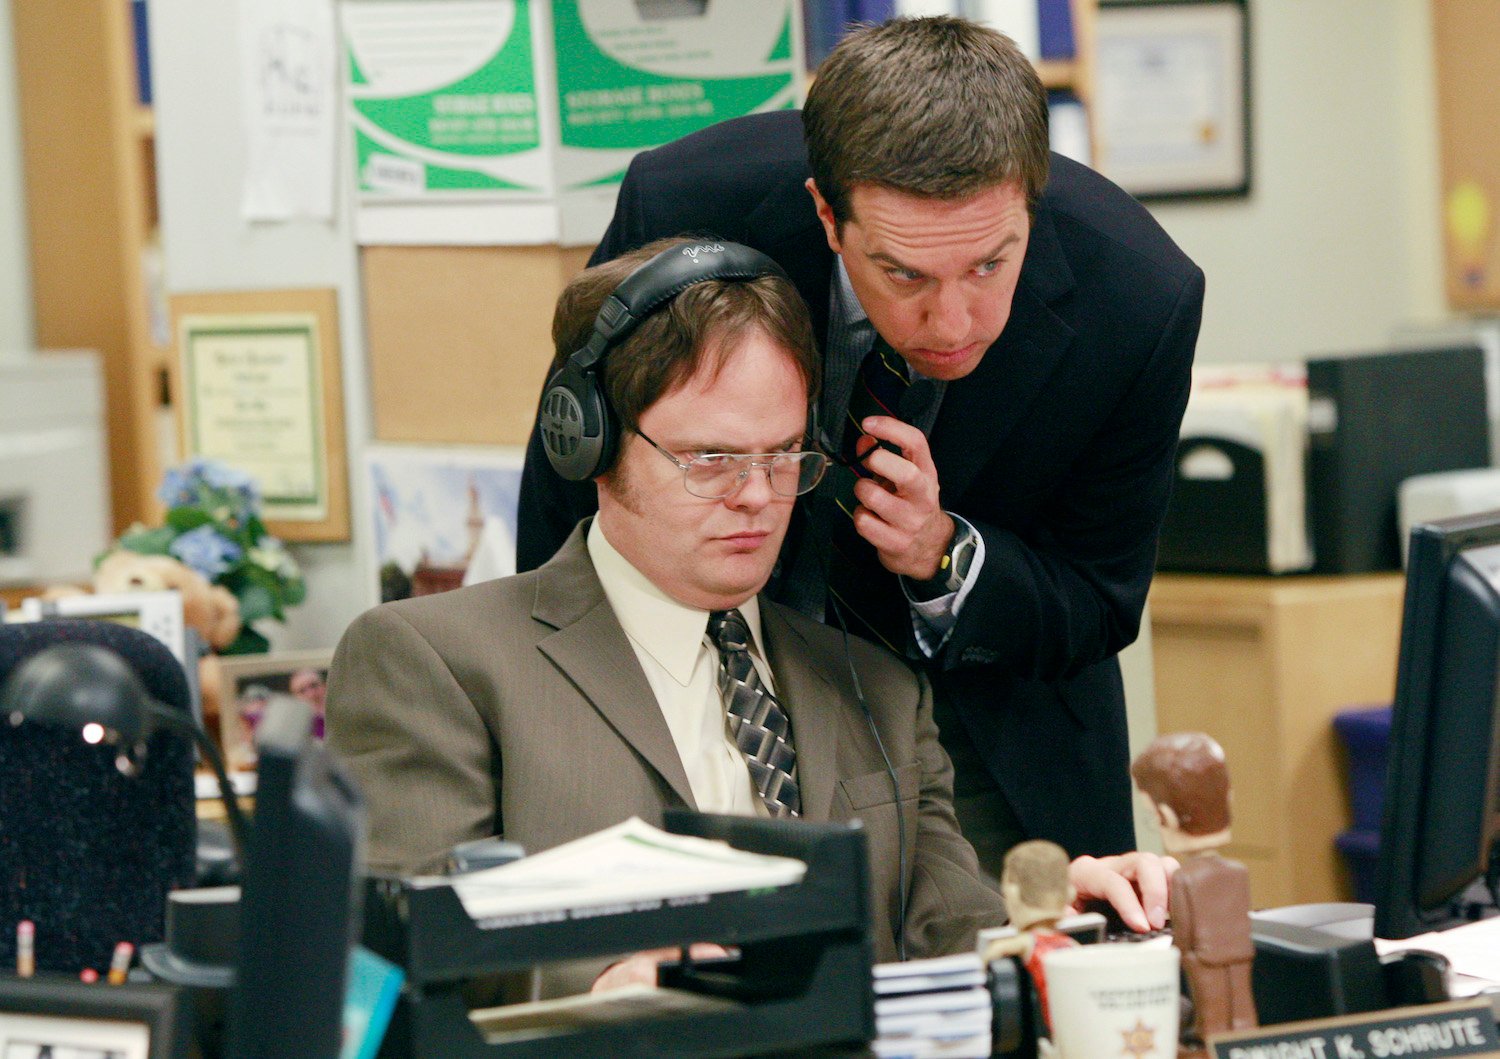 The Office stars Rainn Wilson as Dwight Schrute and Ed Helms as Andy Bernard during a scene